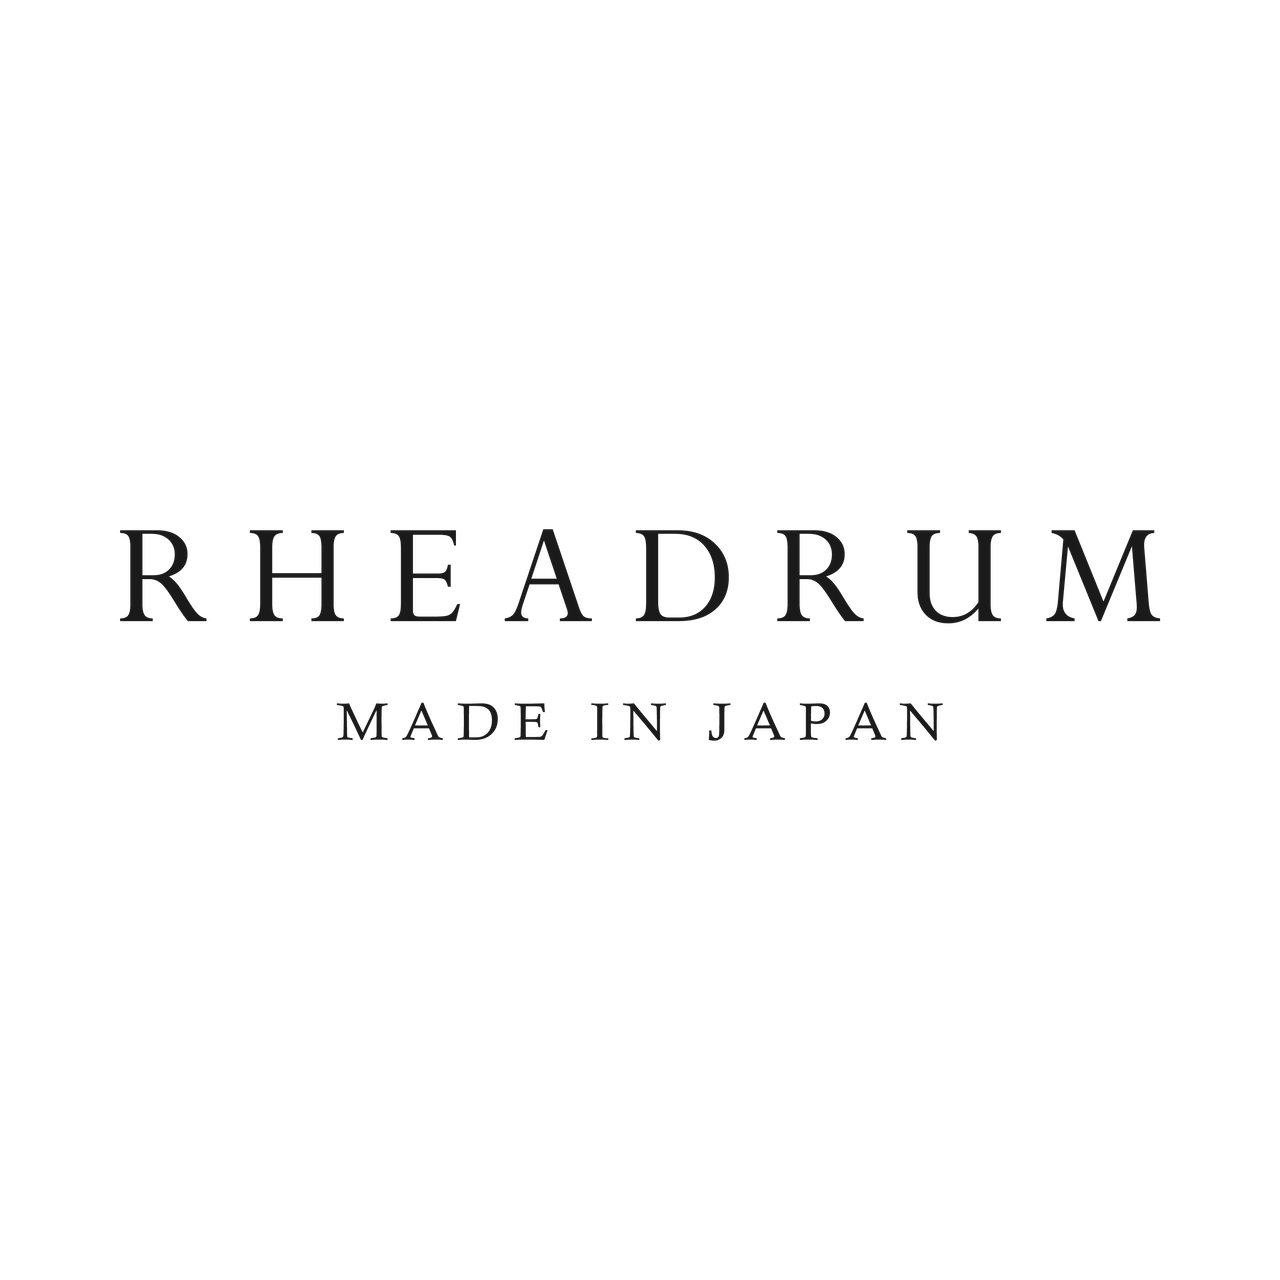 Rheadrum